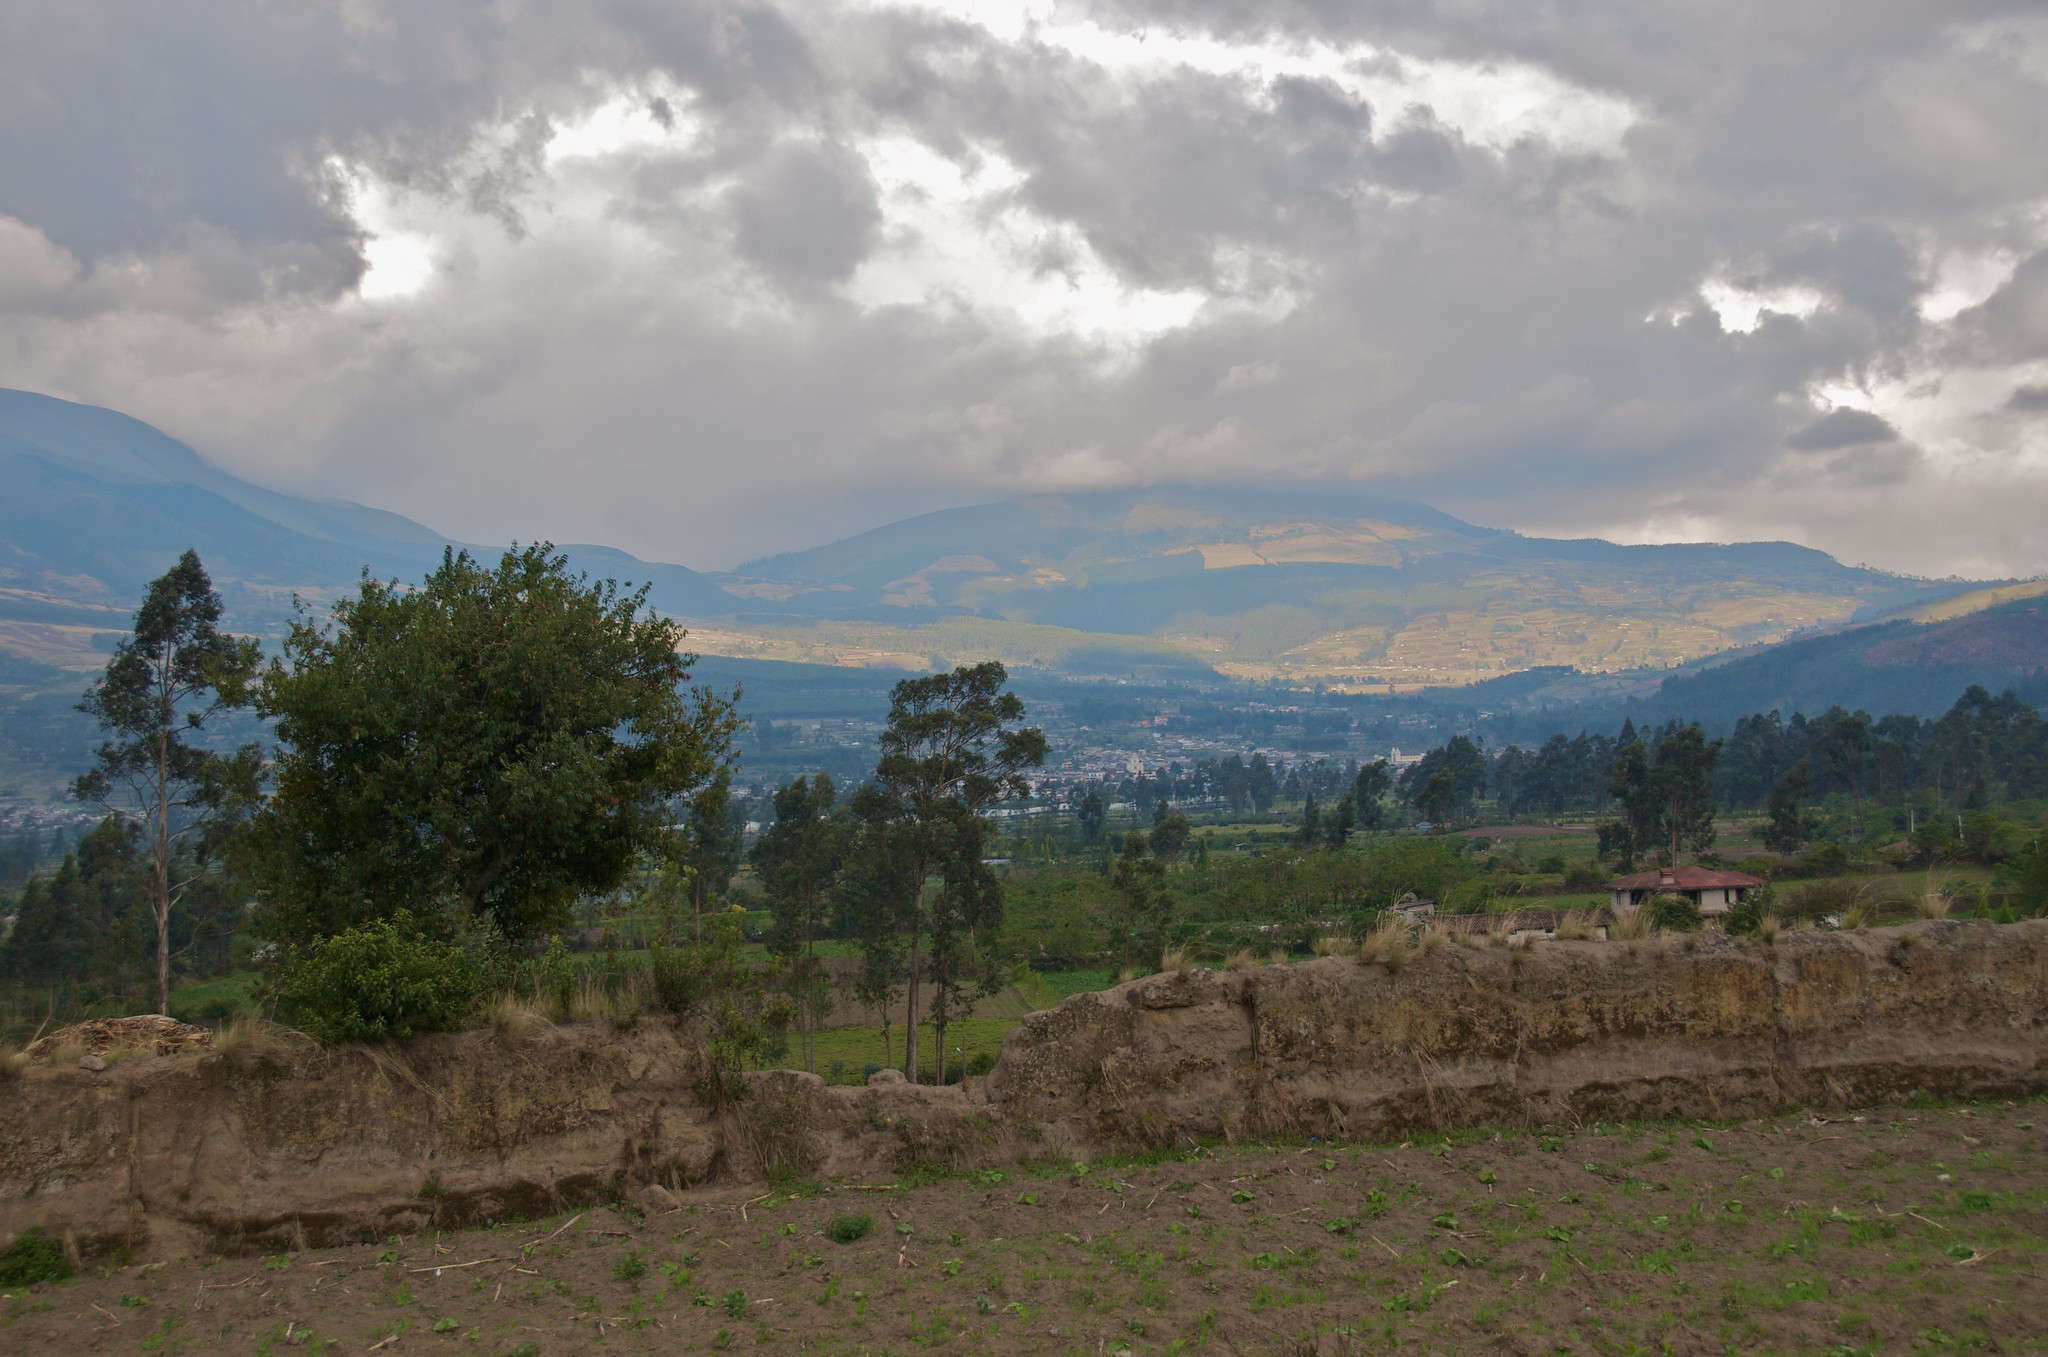 Landscapes Ecuador, photo by A Davey,2009, Flickr, CC BY-NC 2.0